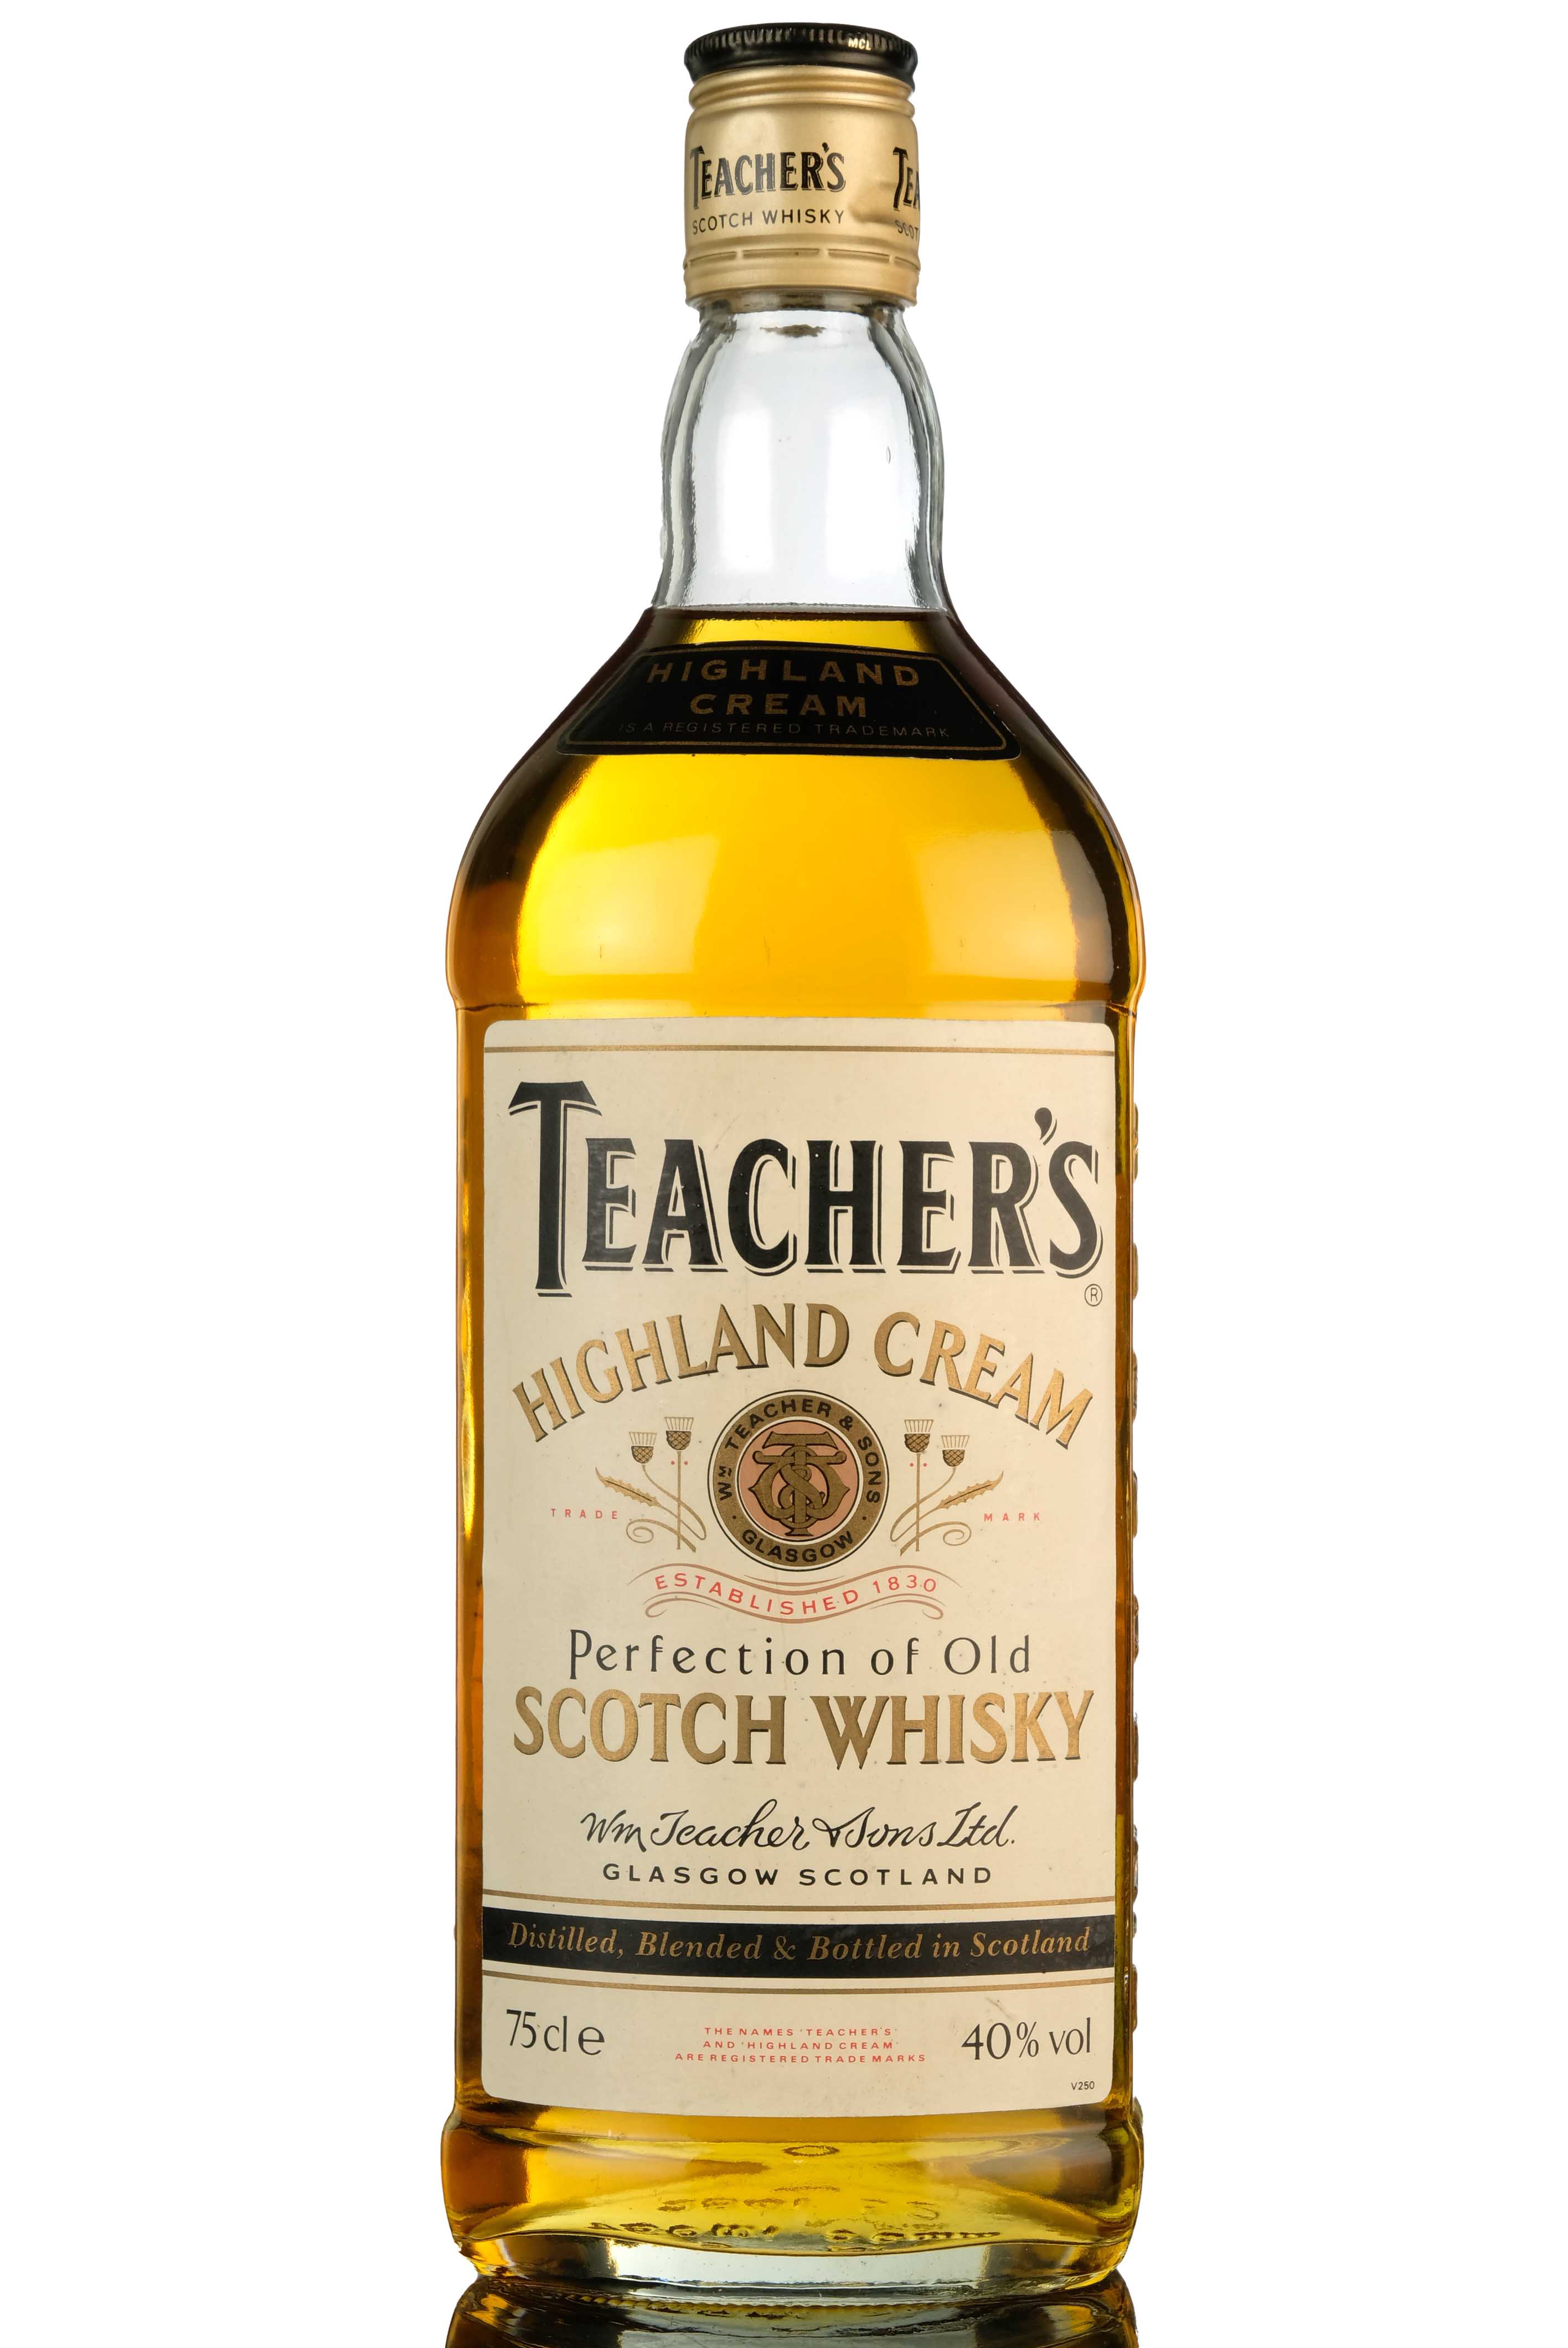 Teachers Highland Cream - 1980s